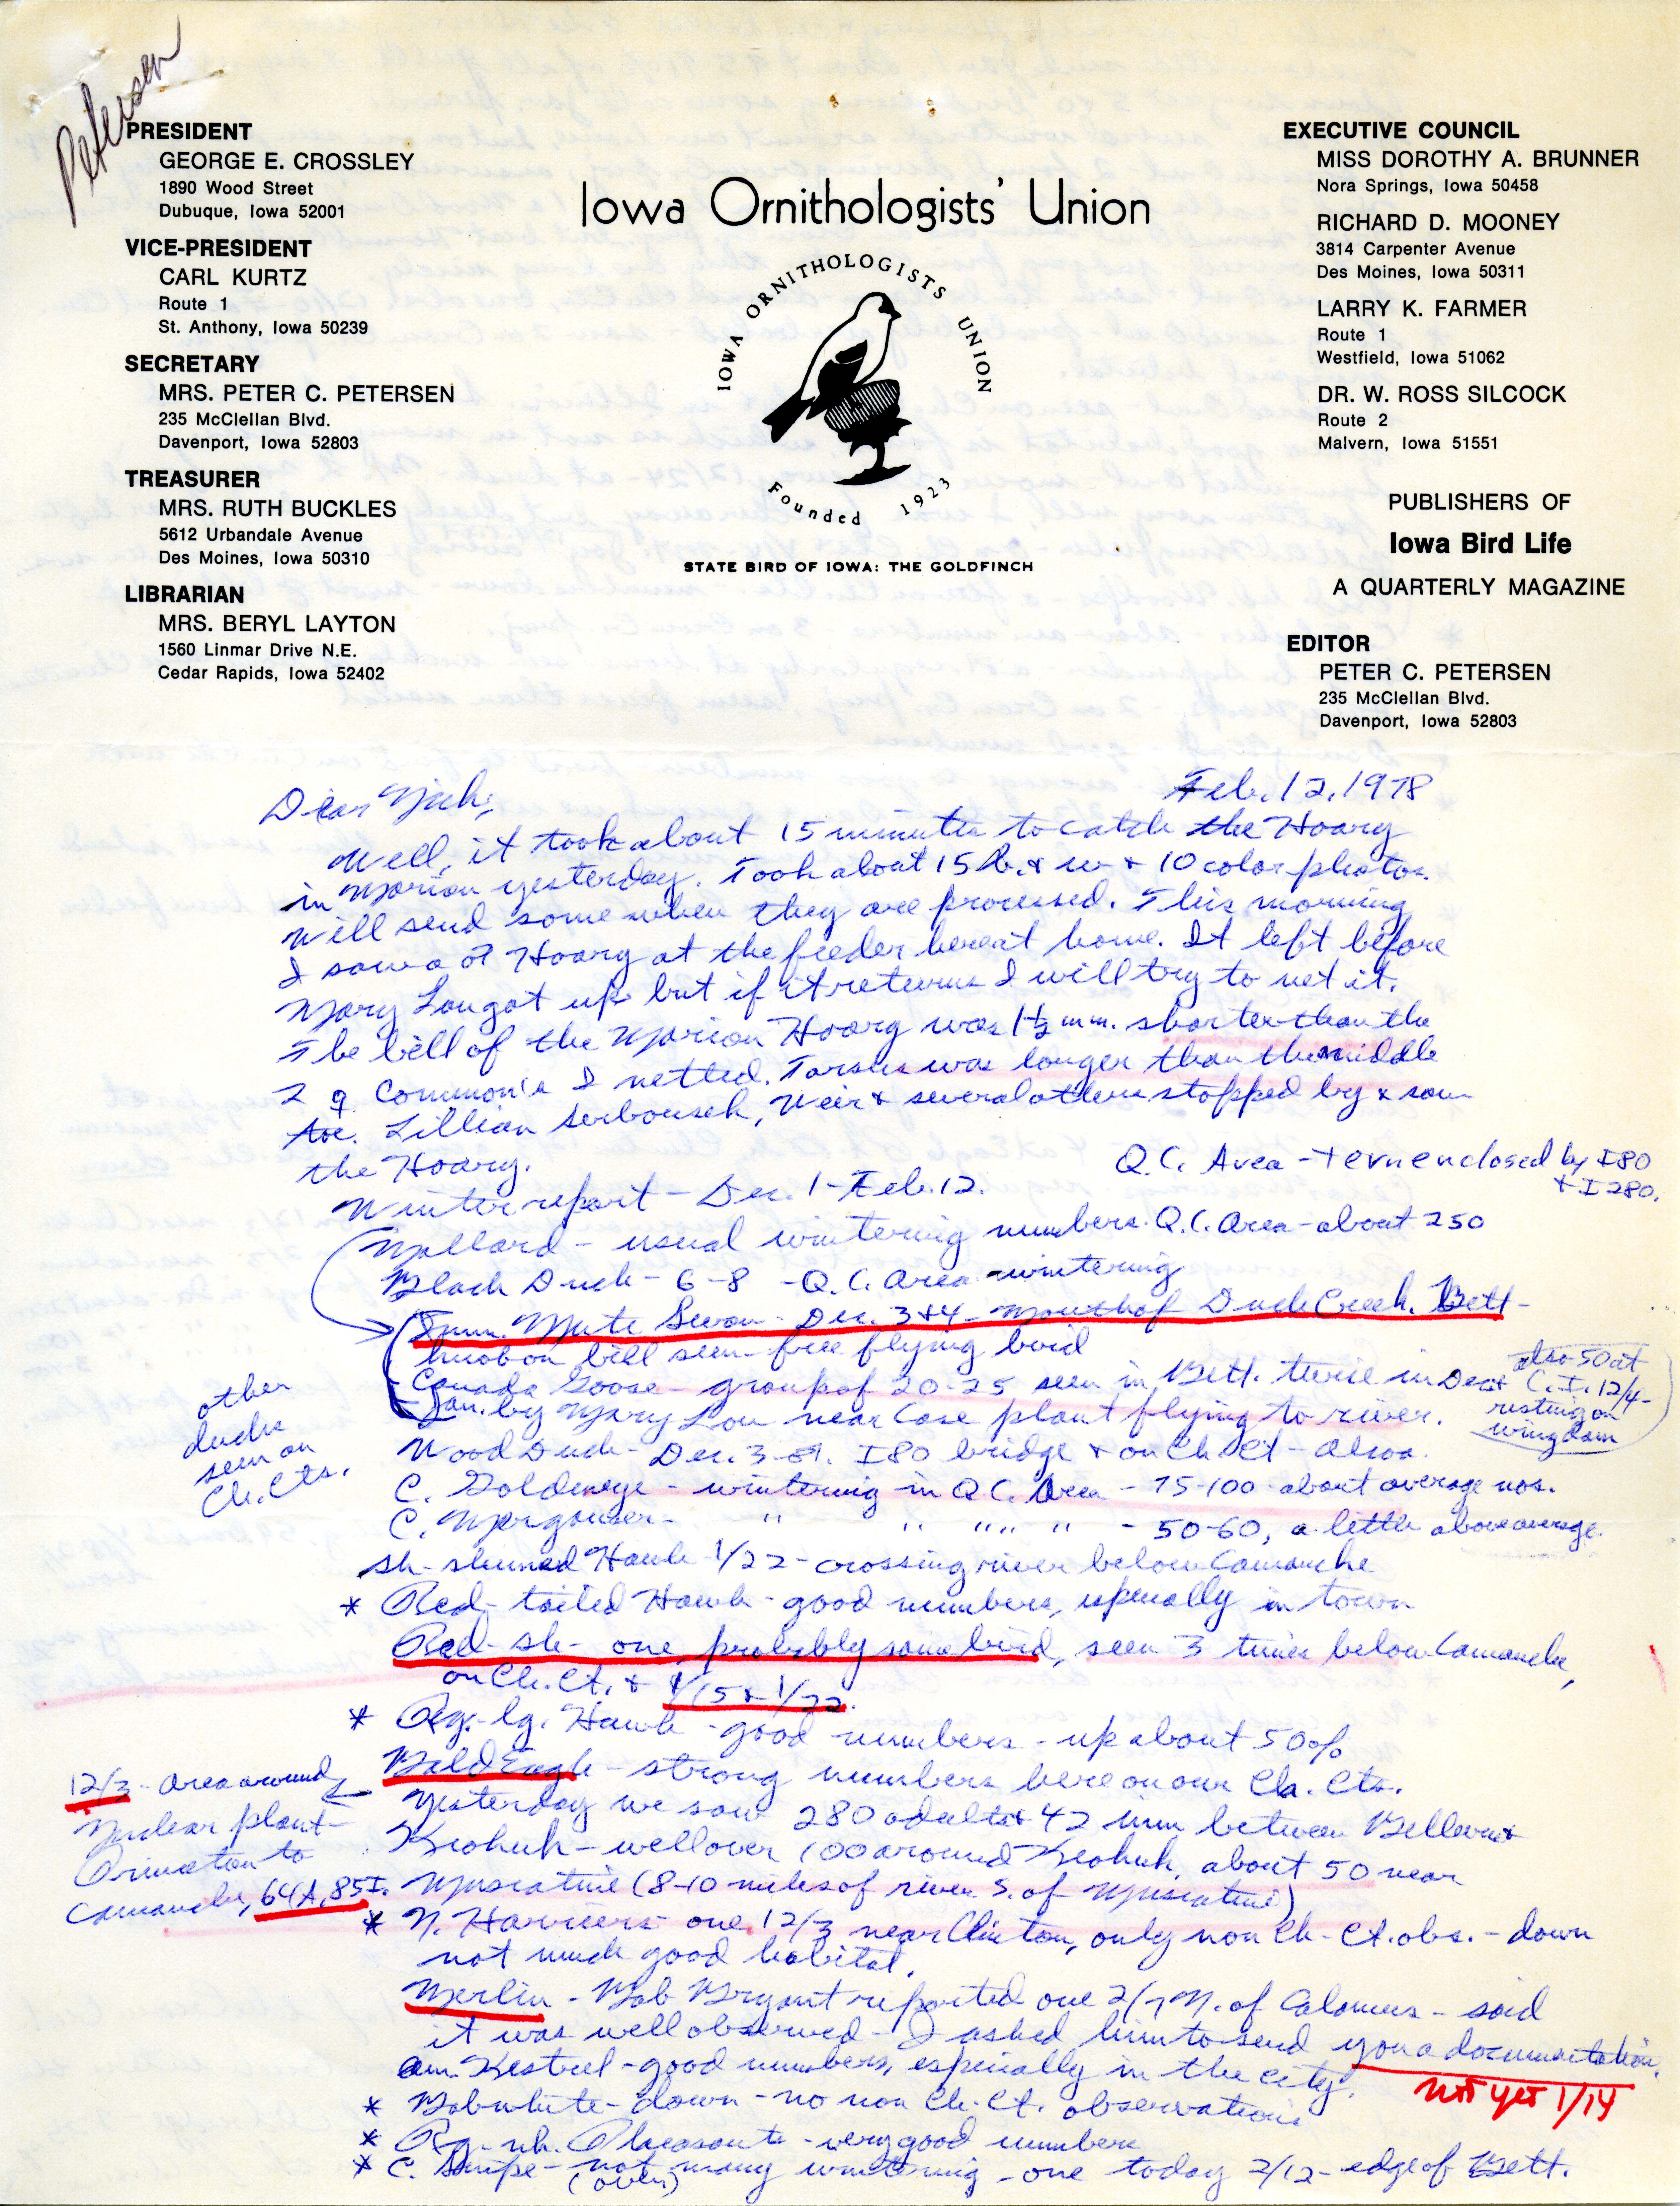 Peter C. Petersen letters to Nicholas S. Halmi regarding bird sightings, February 12, 1978 